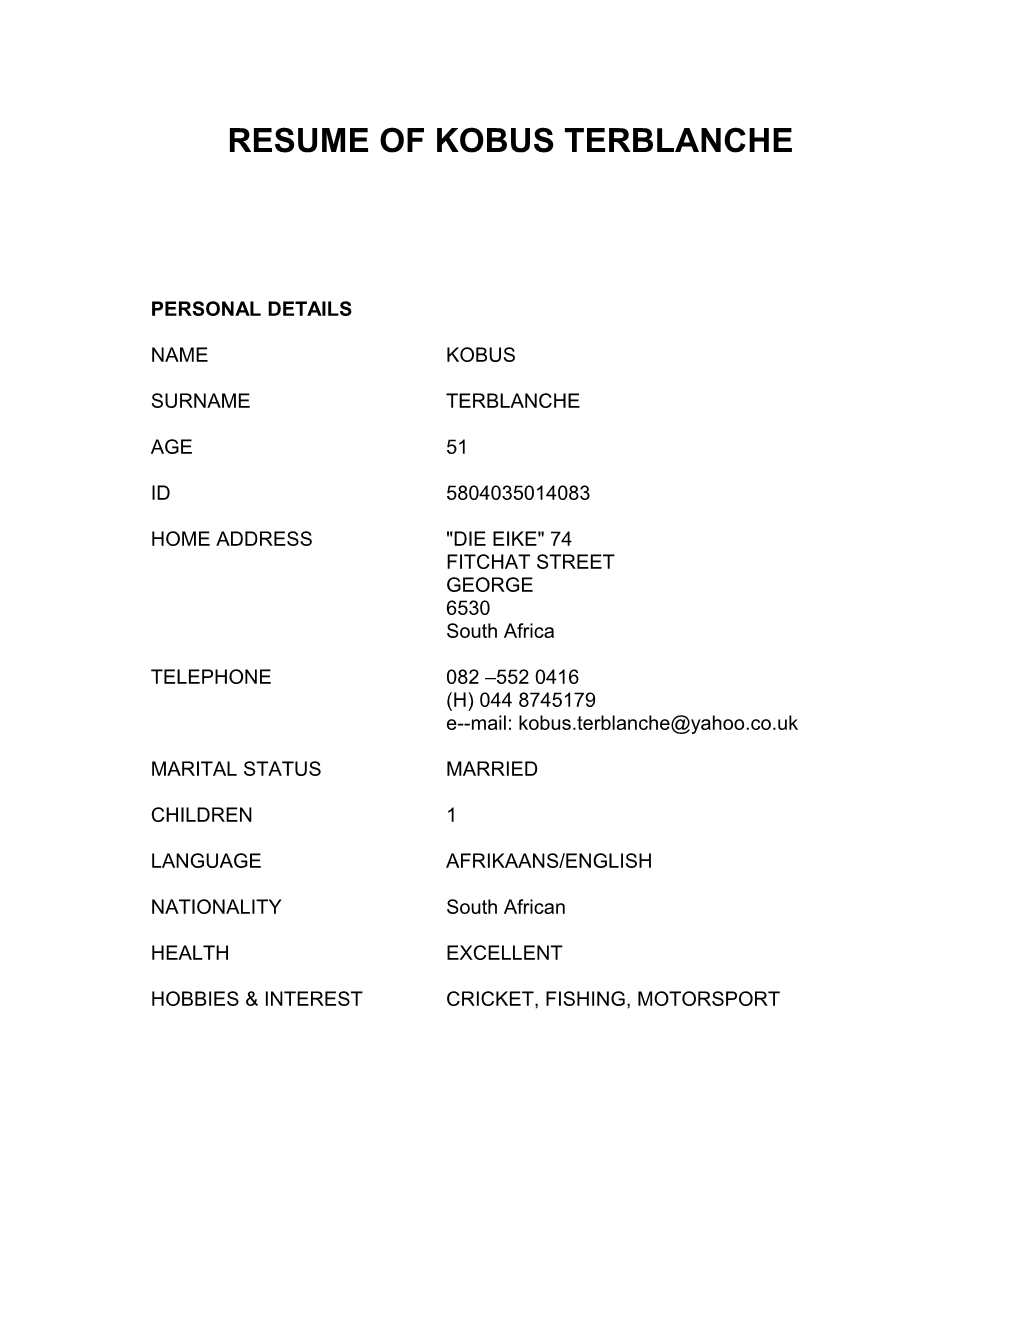 Resume of Kobus Terblanche